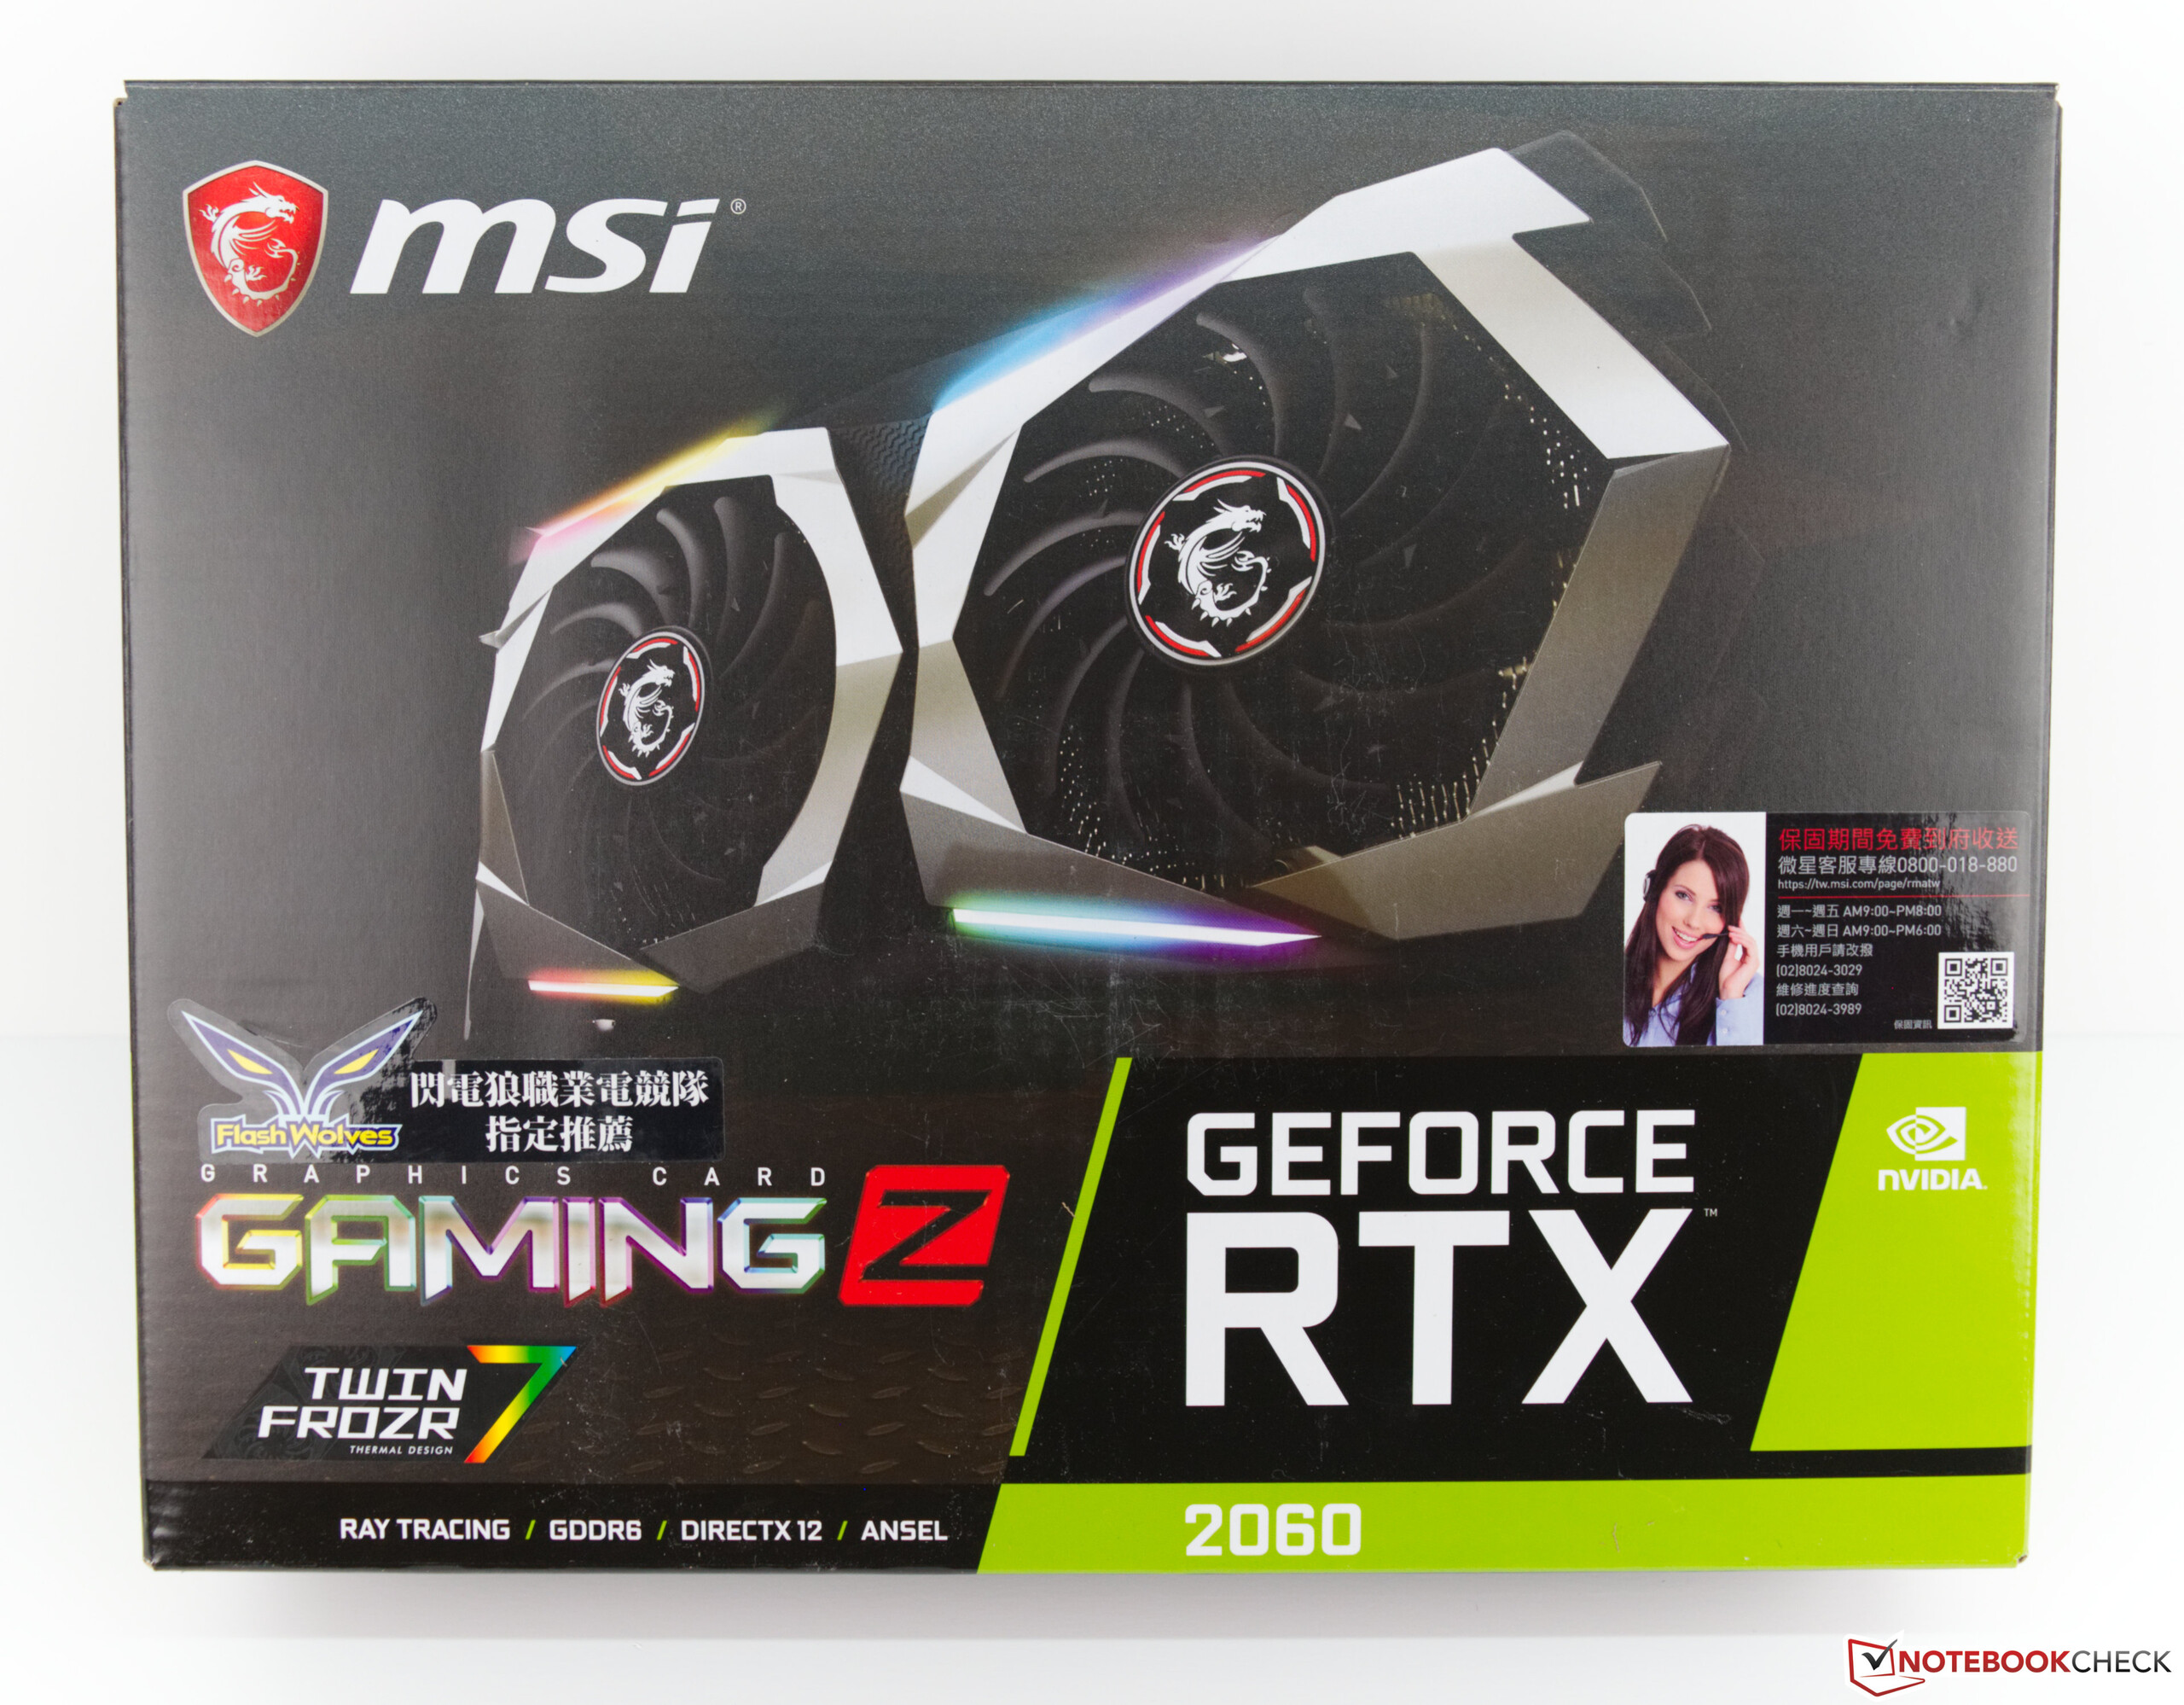 MSI RTX 2060 Gaming Z Desktop Graphics Card - NotebookCheck.net Reviews